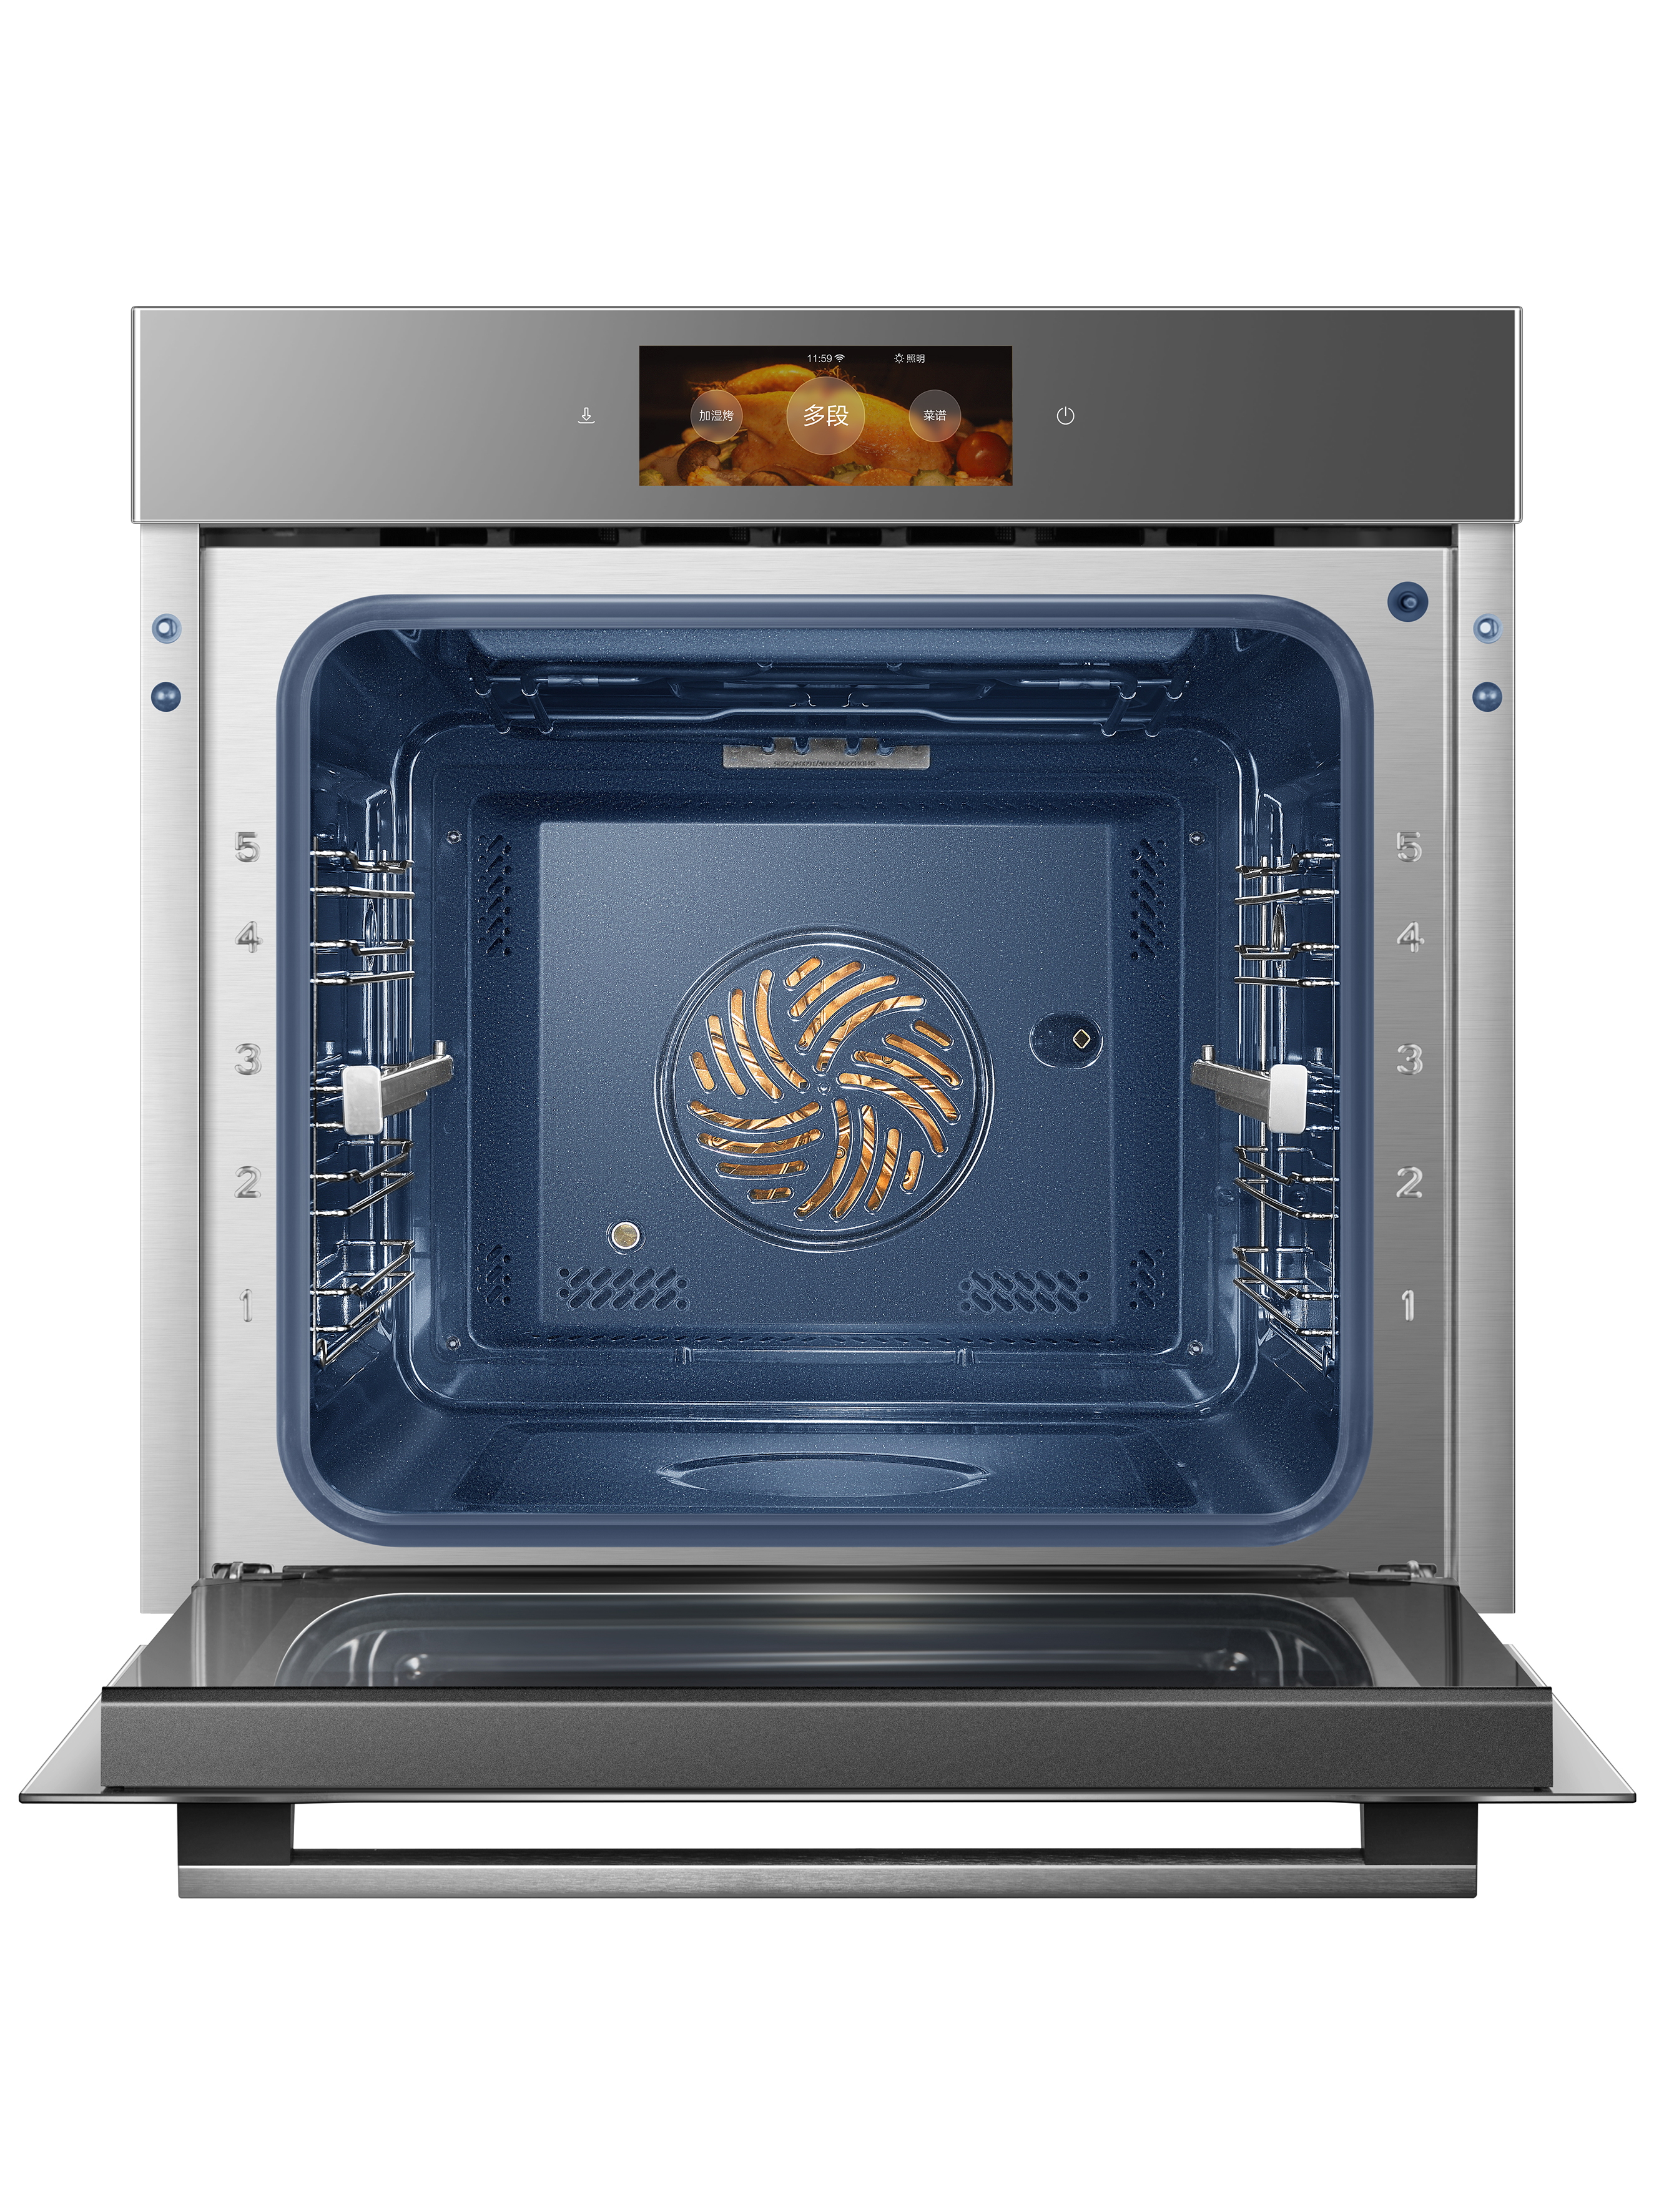 Steam-bake-fry Combi Oven CQ926L60